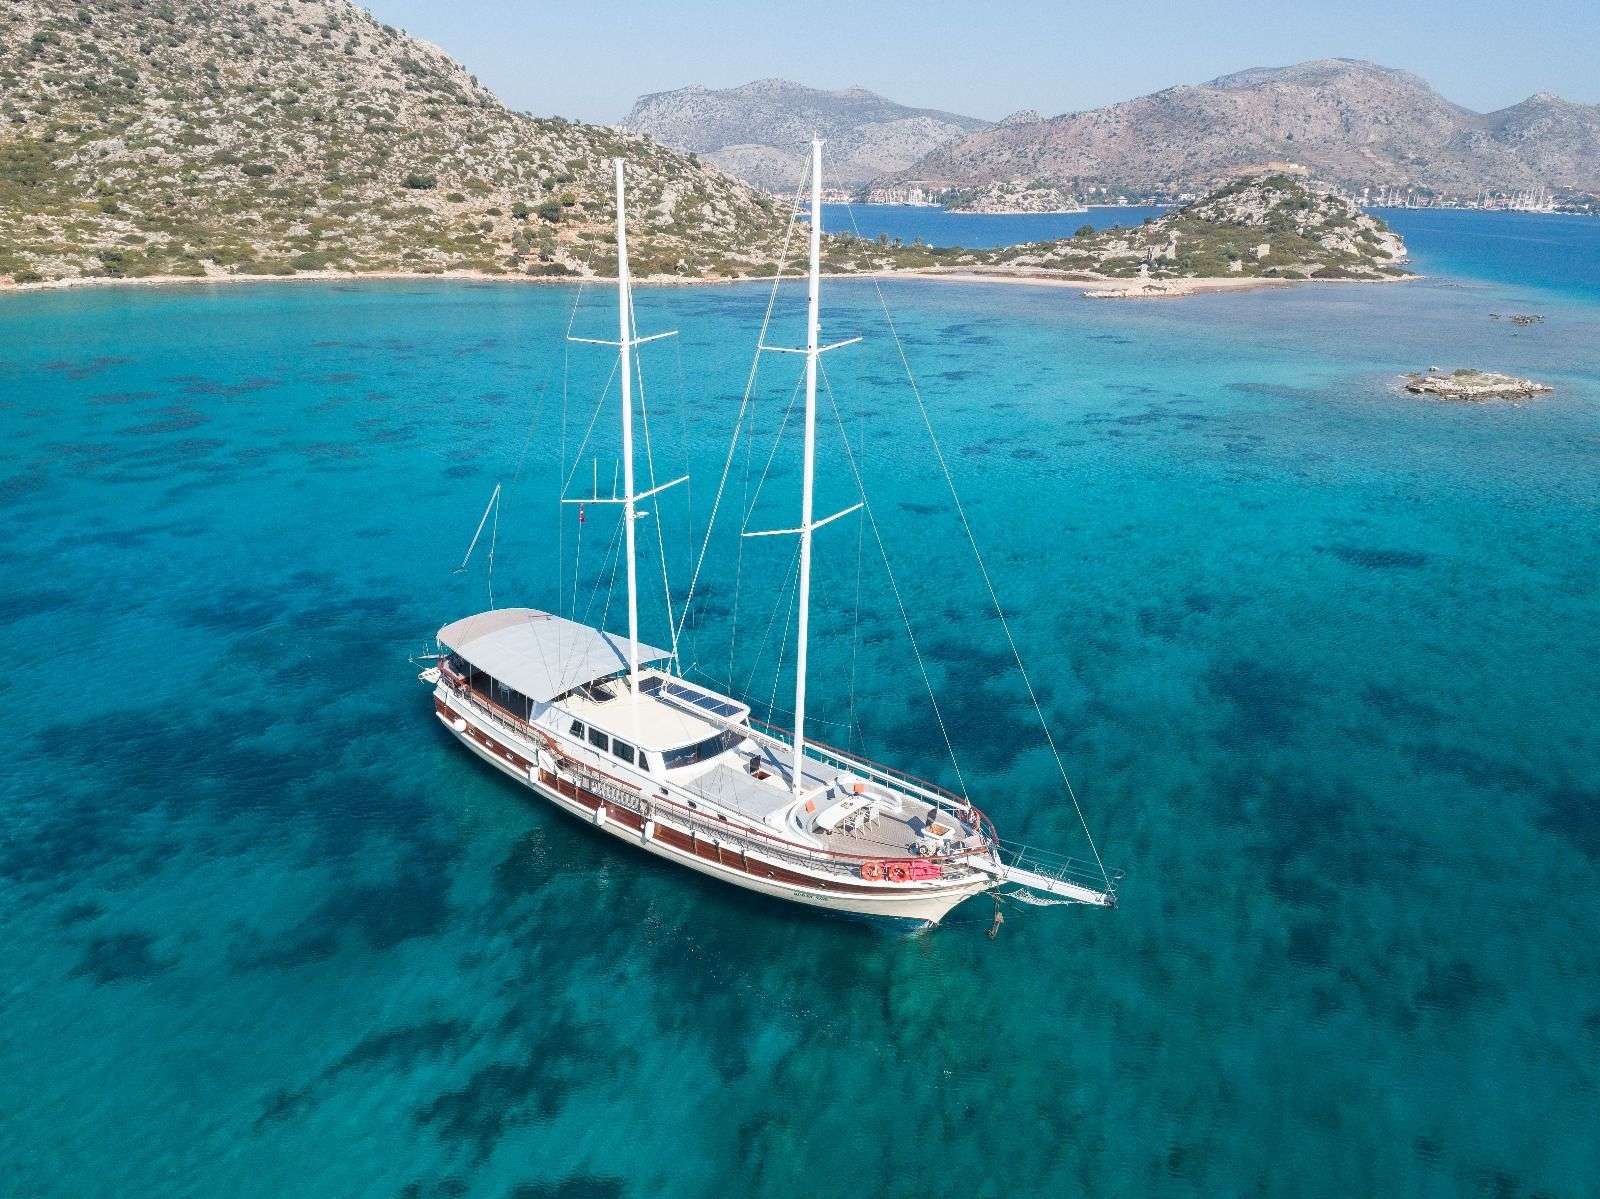 koray ege - Yacht Charter Istanbul & Boat hire in Greece & Turkey 2